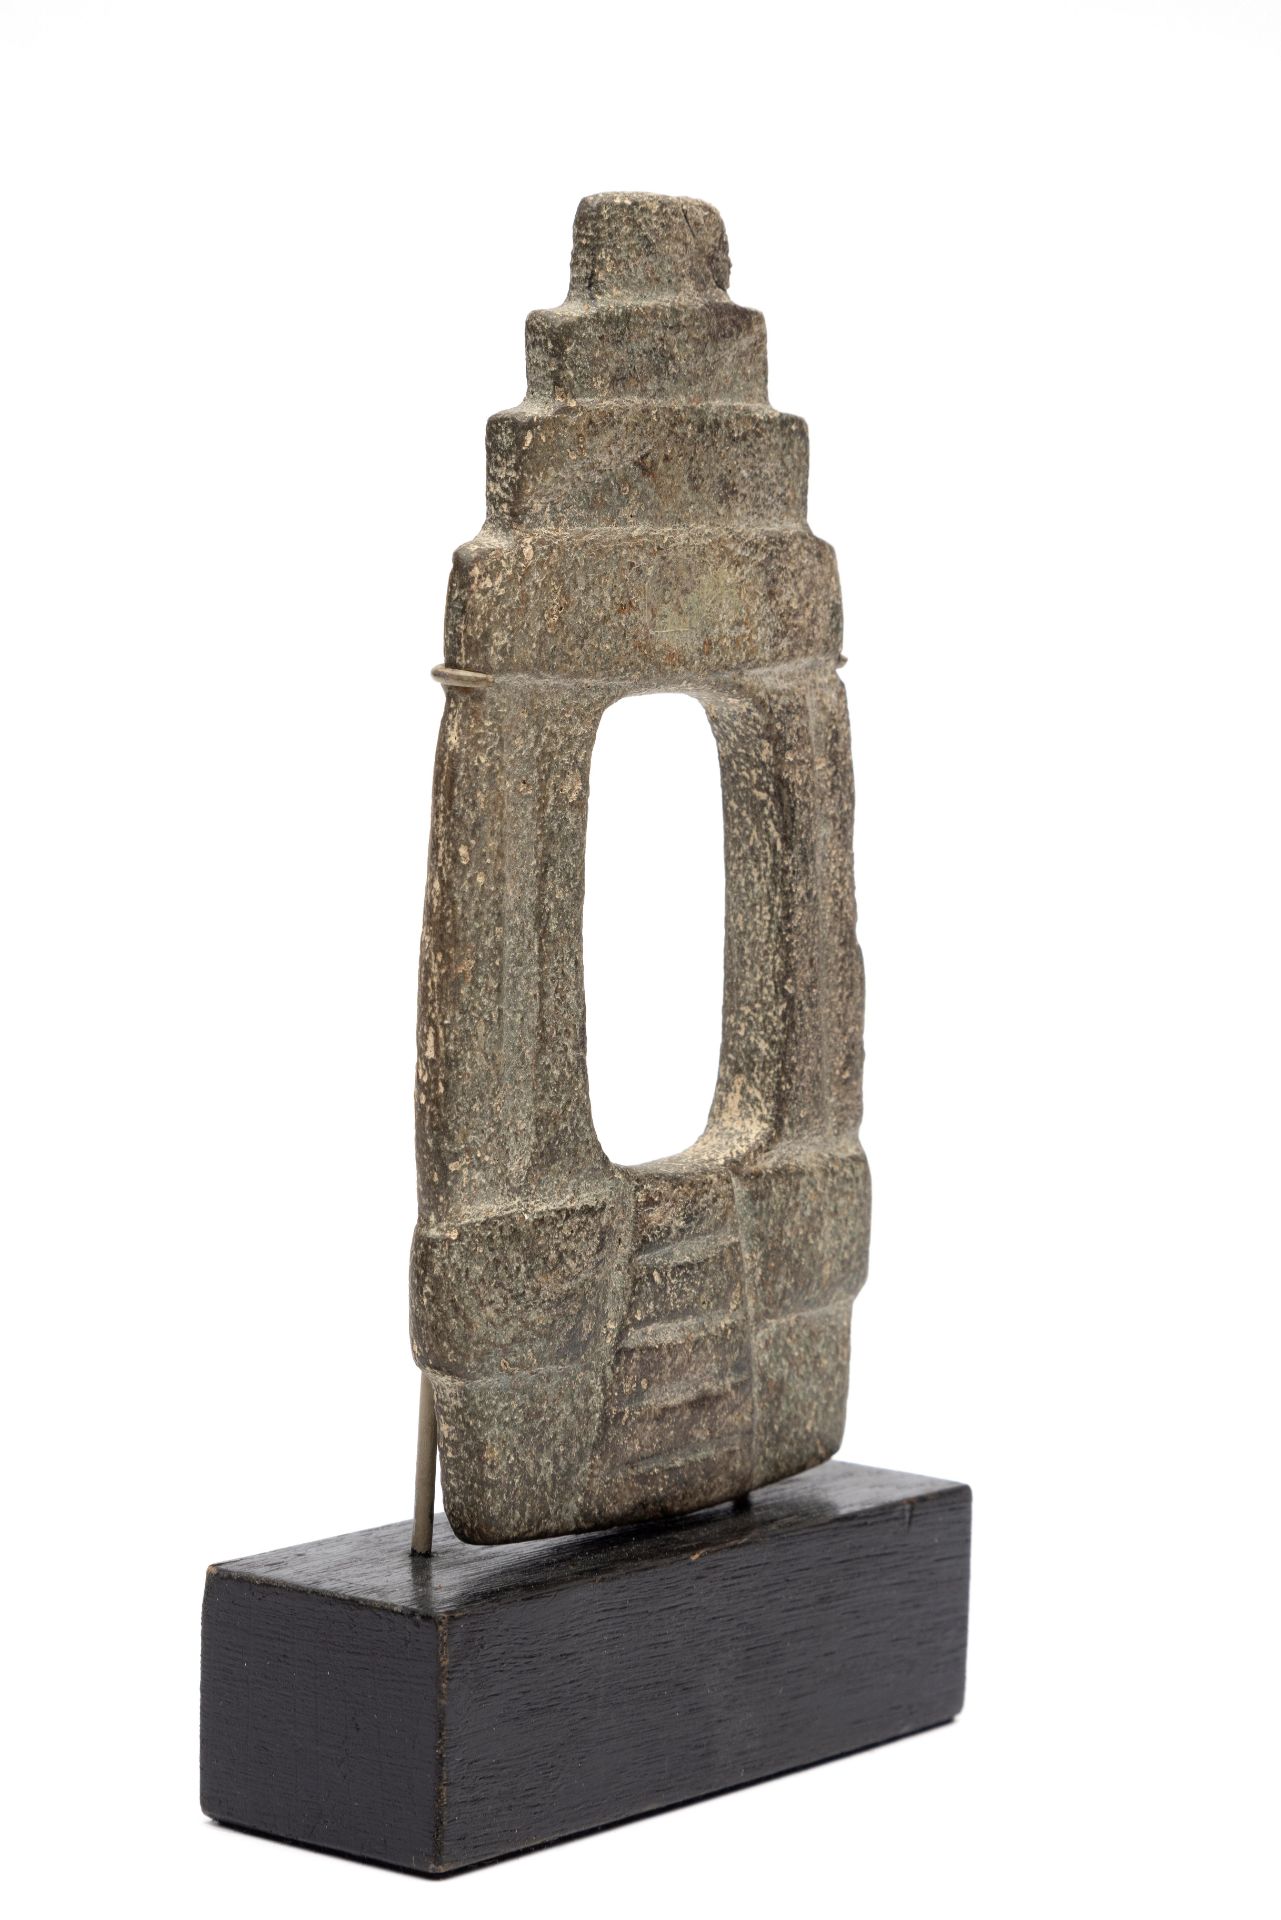 Mexico, Mezcala, grey stone temple sculpture, 300 BC - 100 BC. - Image 2 of 3